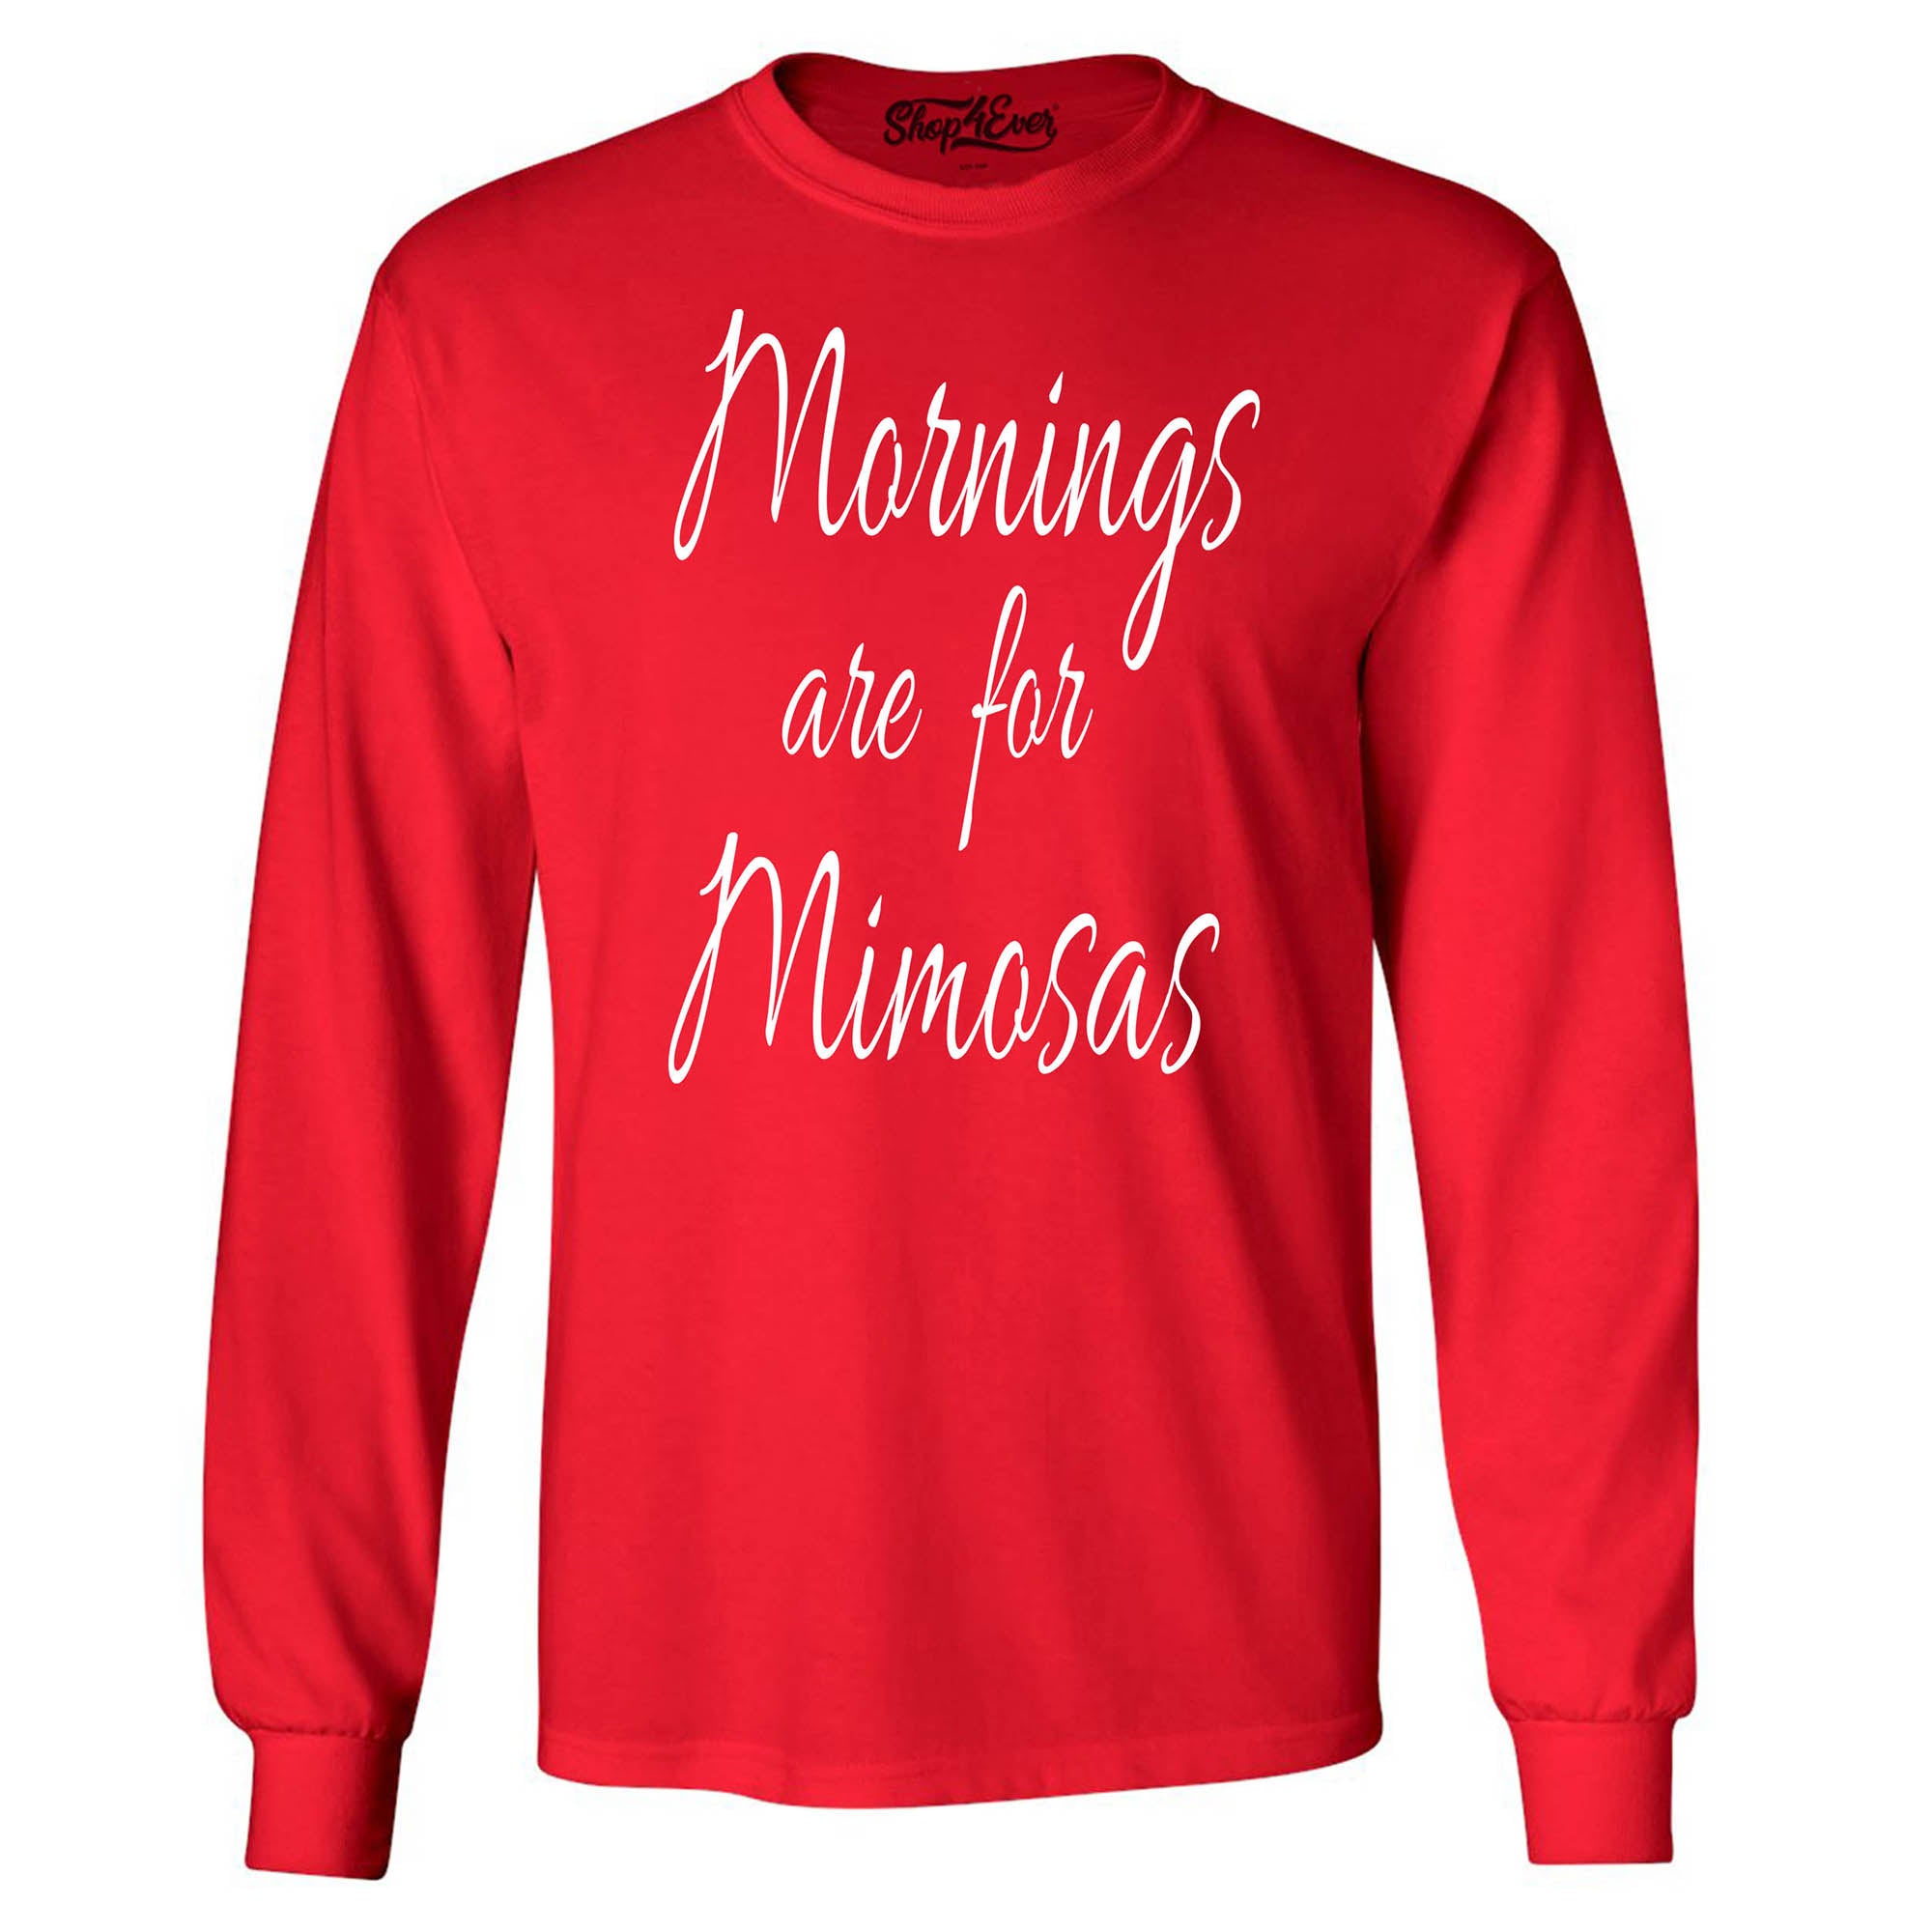 Mornings are for Mimosas Long Sleeve Shirt Sayings Shirts